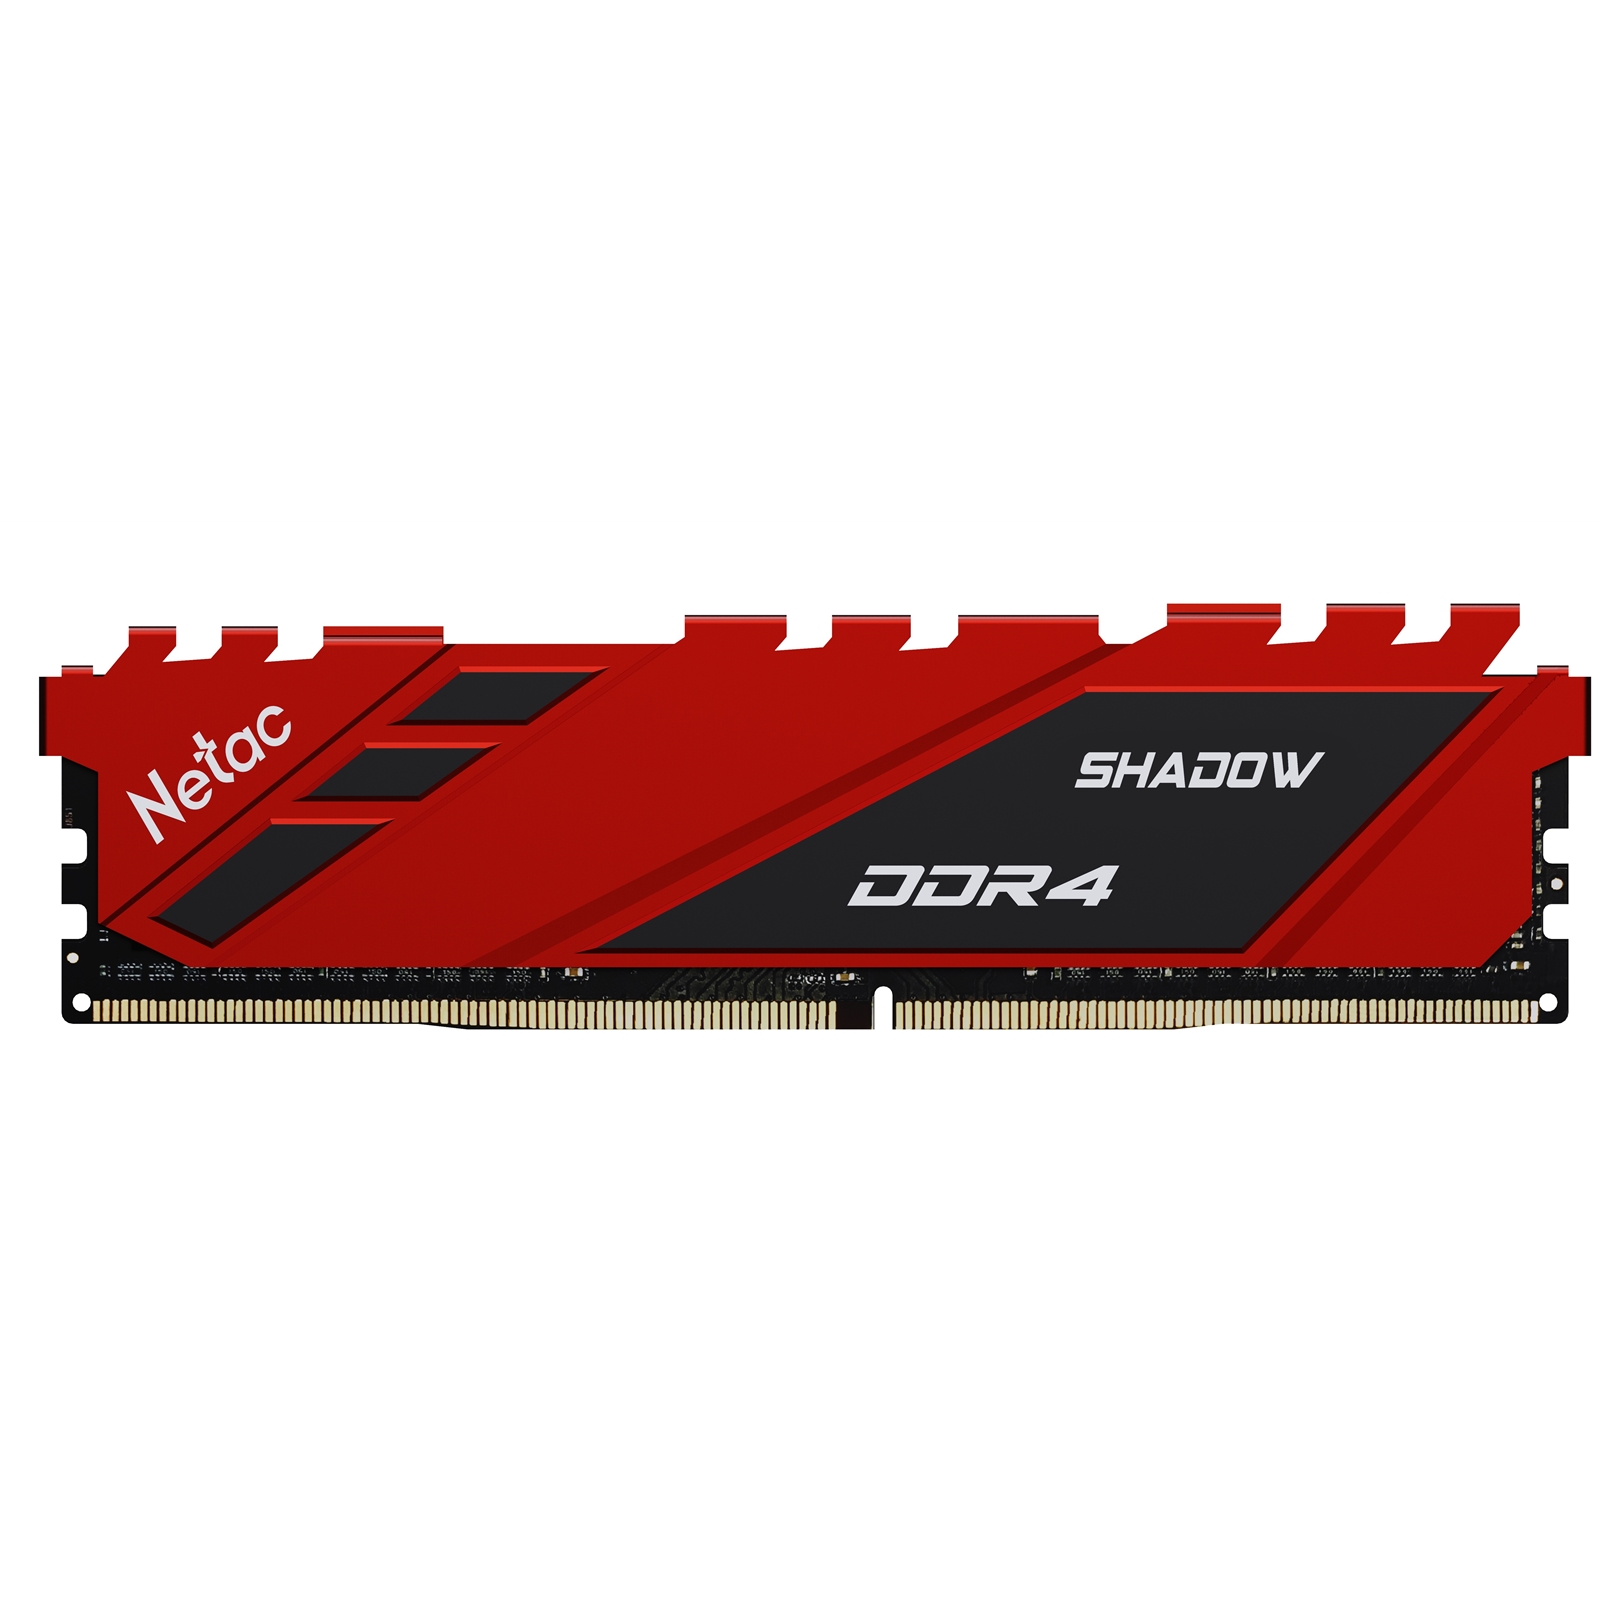 Netac Shadow NTSDD4P32SP-08R 8GB DIMM Gaming System Memory, DDR4, 3200MHz, 1 x 8GB, Red Heatsink, 288 Pin, 1.35v, CL16-20-20-40